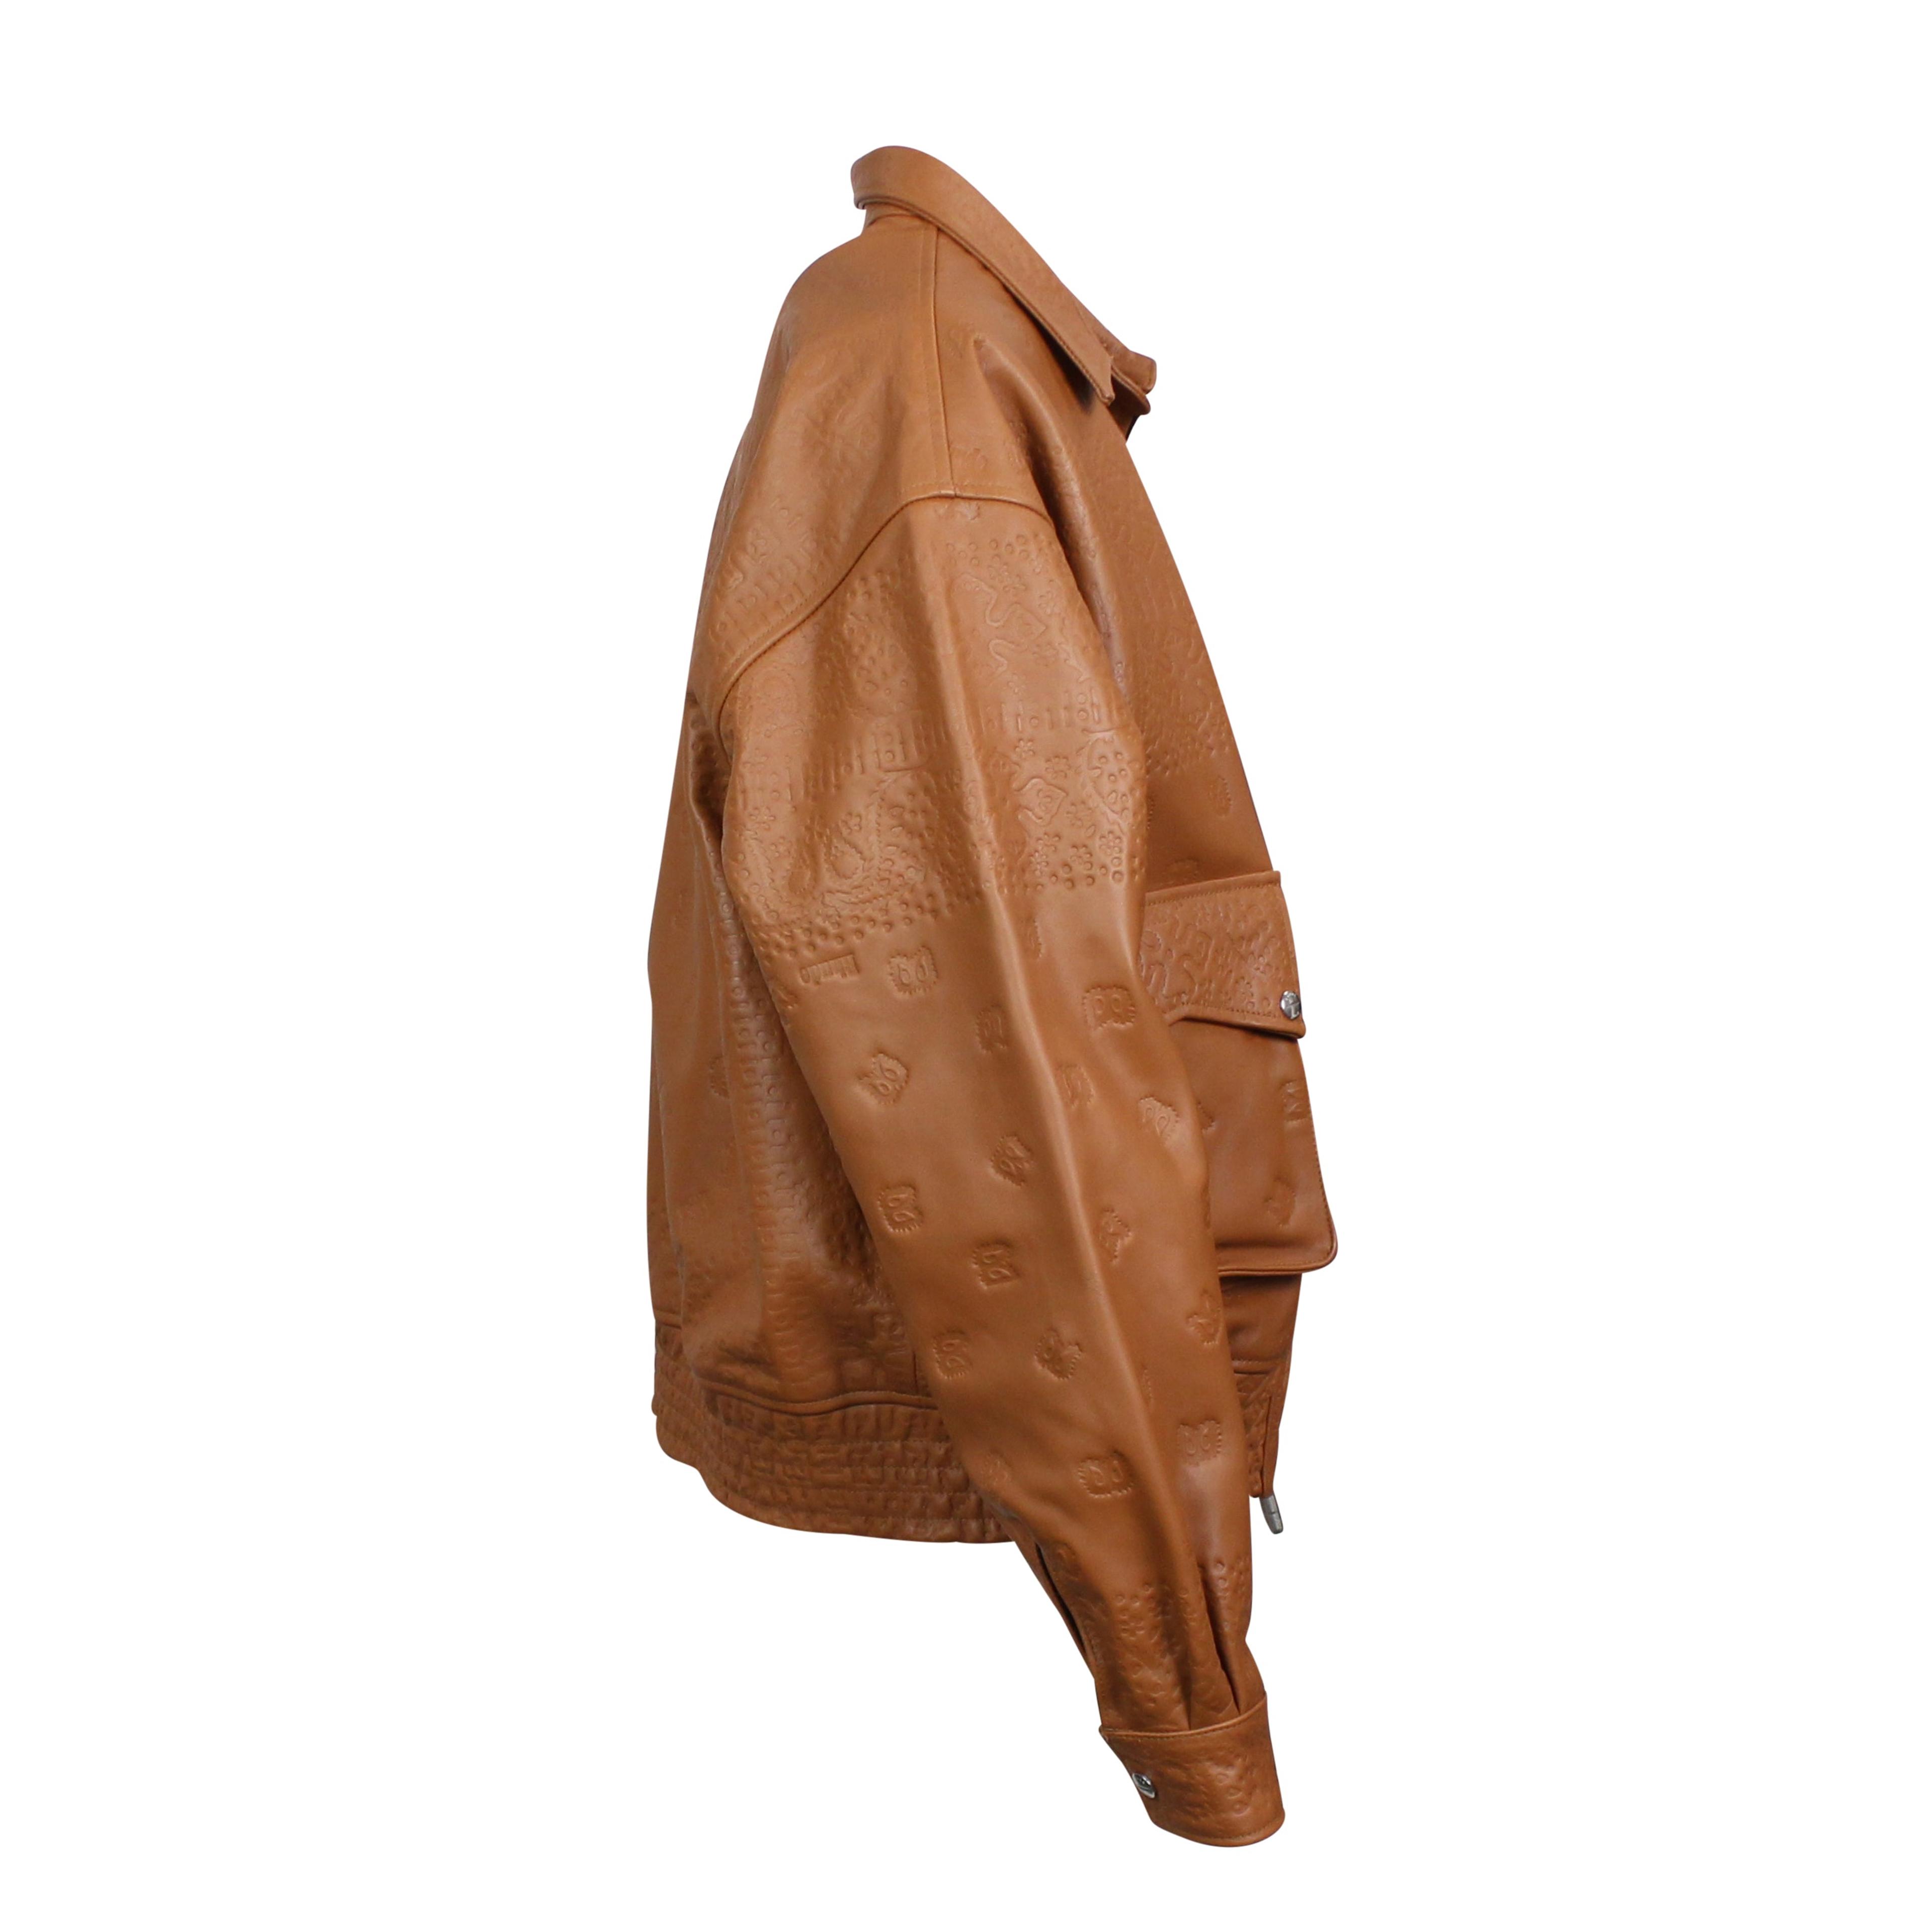 Alternate View 2 of Tan Brown Embossed Blouson Leather Suiting Jacket